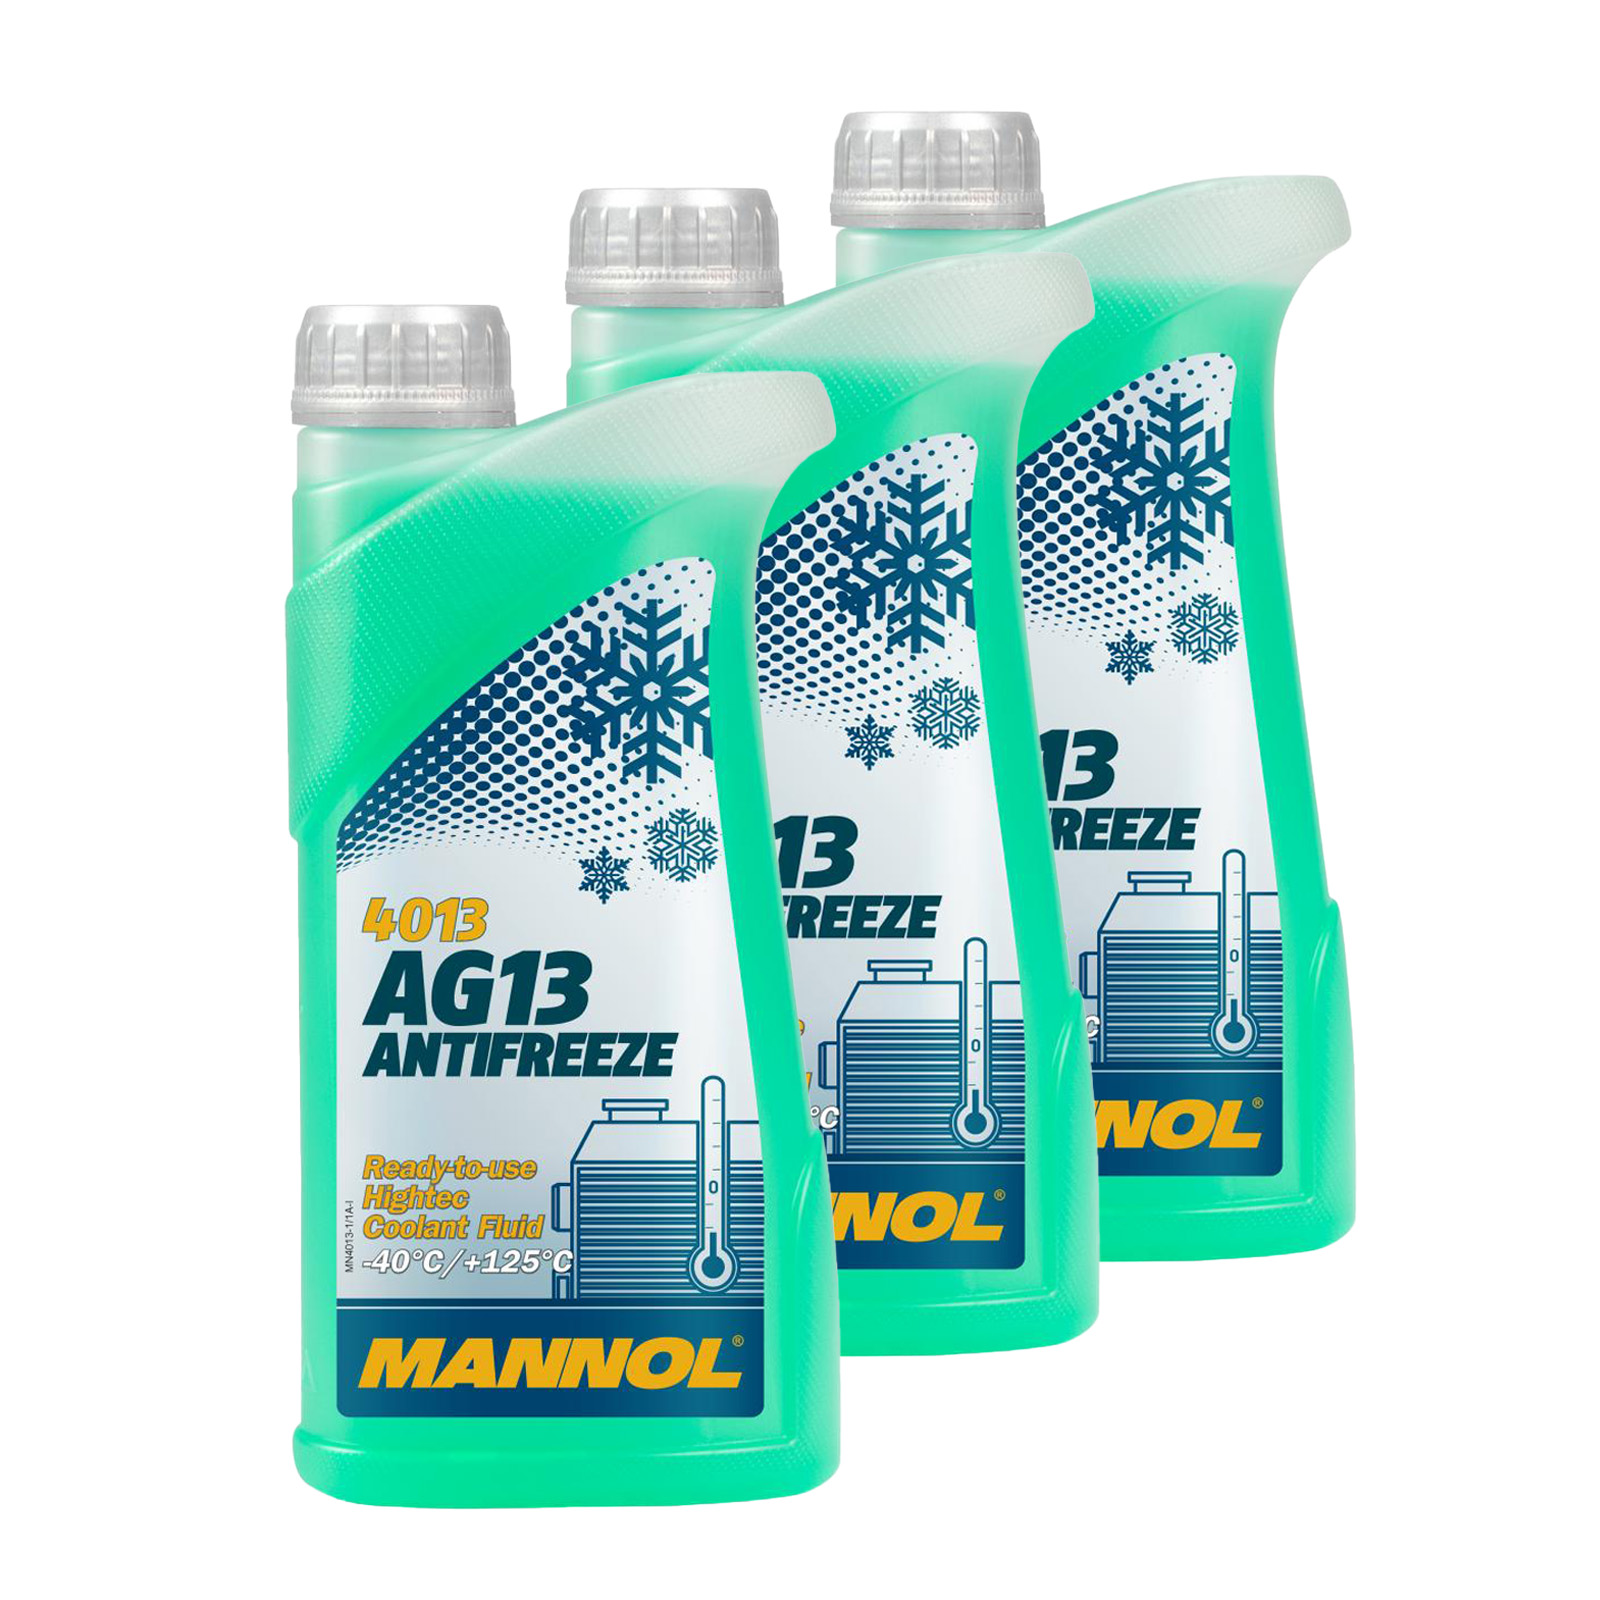 3 Liter (3x1) MANNOL hightech Antifreeze AG13 Frostschutz Fertiggemisch grün -40°C G13